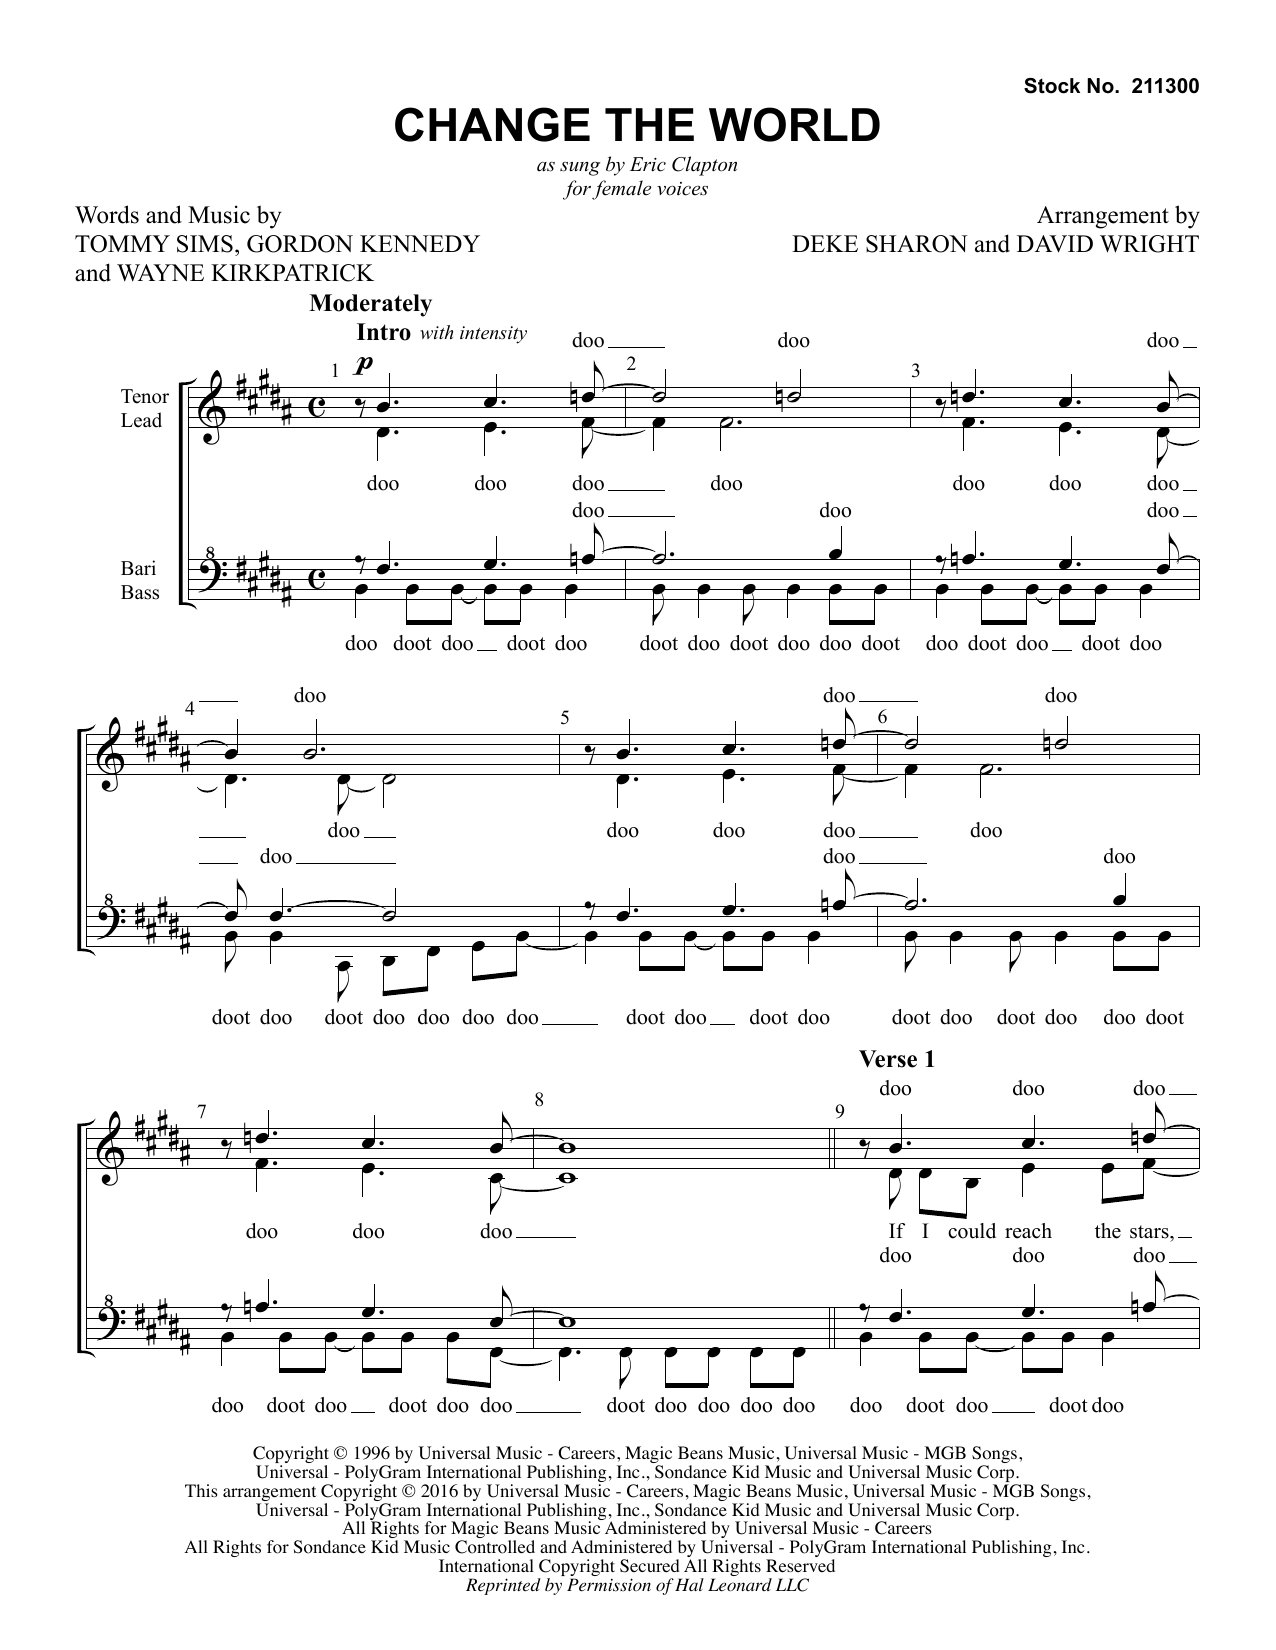 Eric Clapton Change The World (arr. Deke Sharon, David Wright) Sheet Music Notes & Chords for TTBB Choir - Download or Print PDF